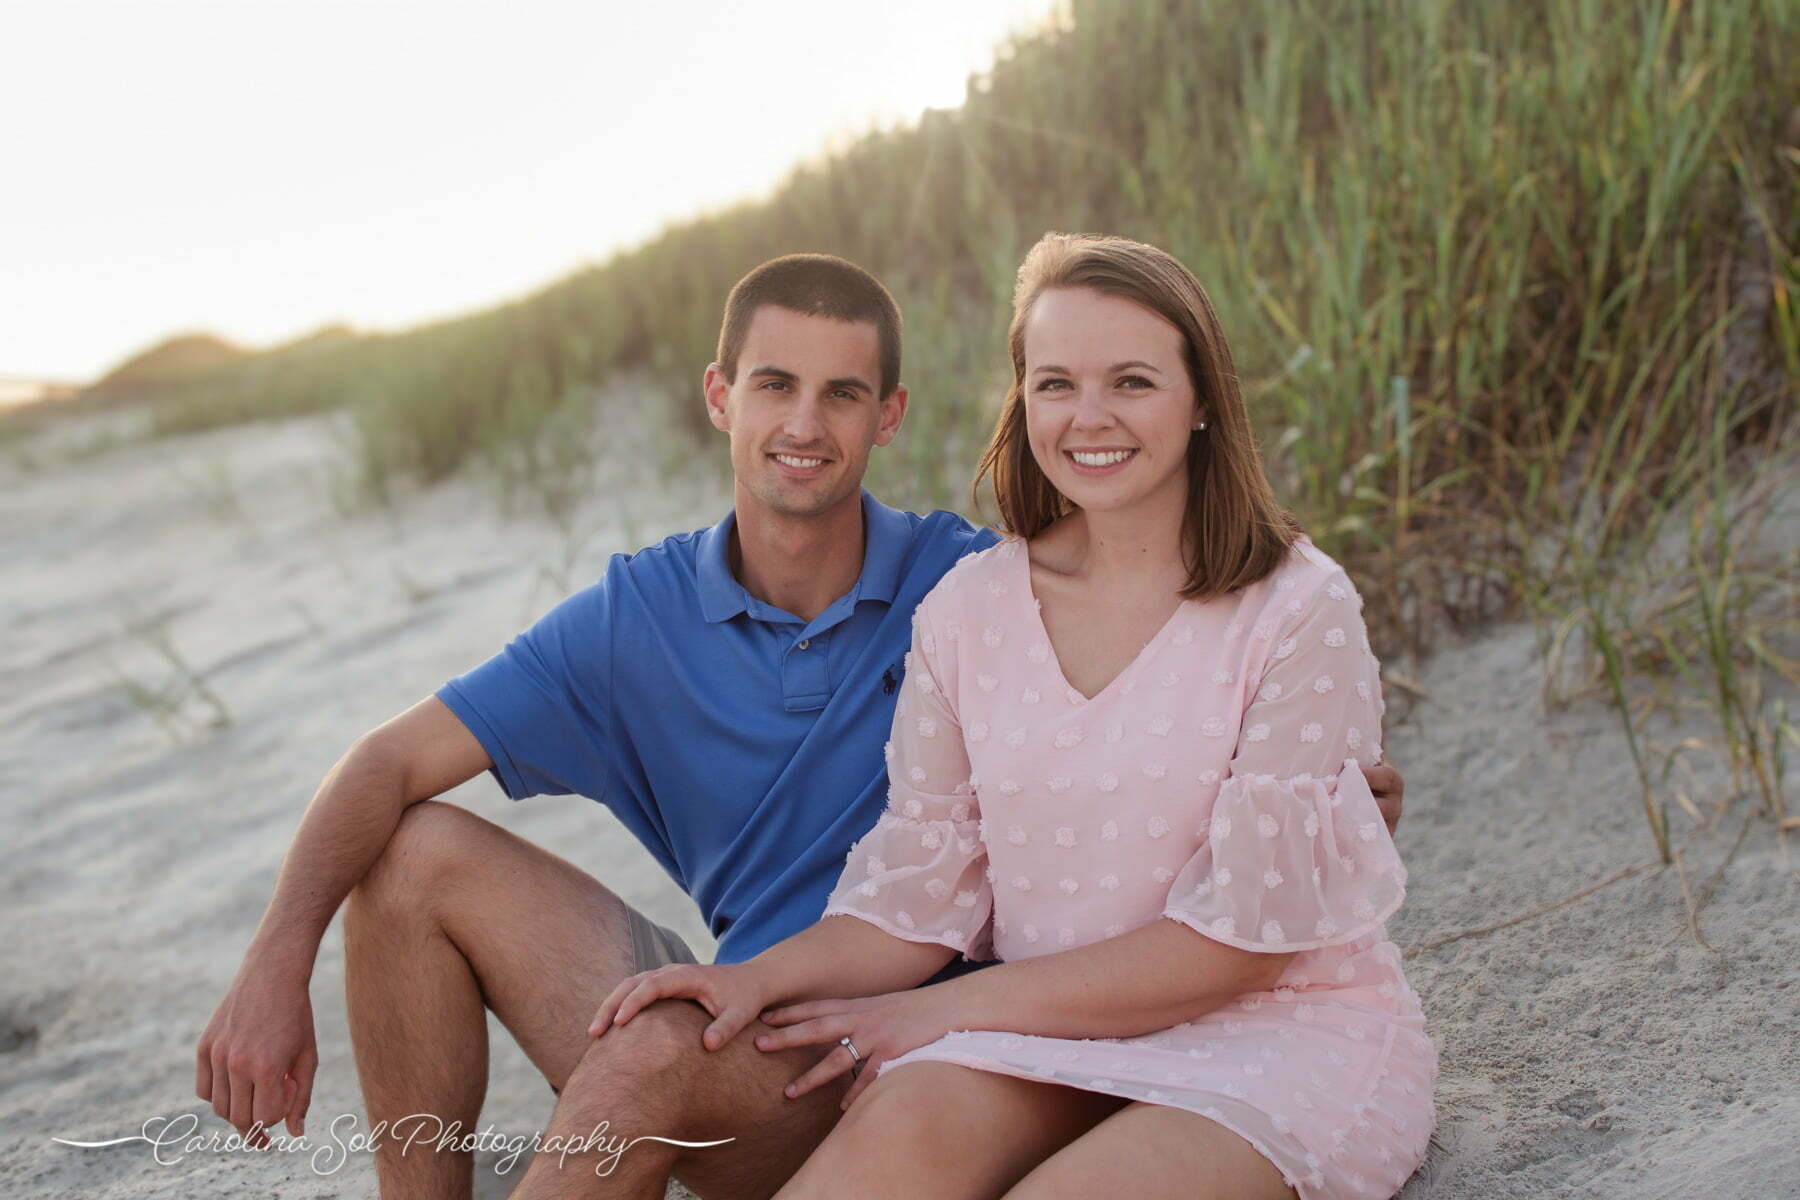 Couples portrait photography Sunset Beach NC.